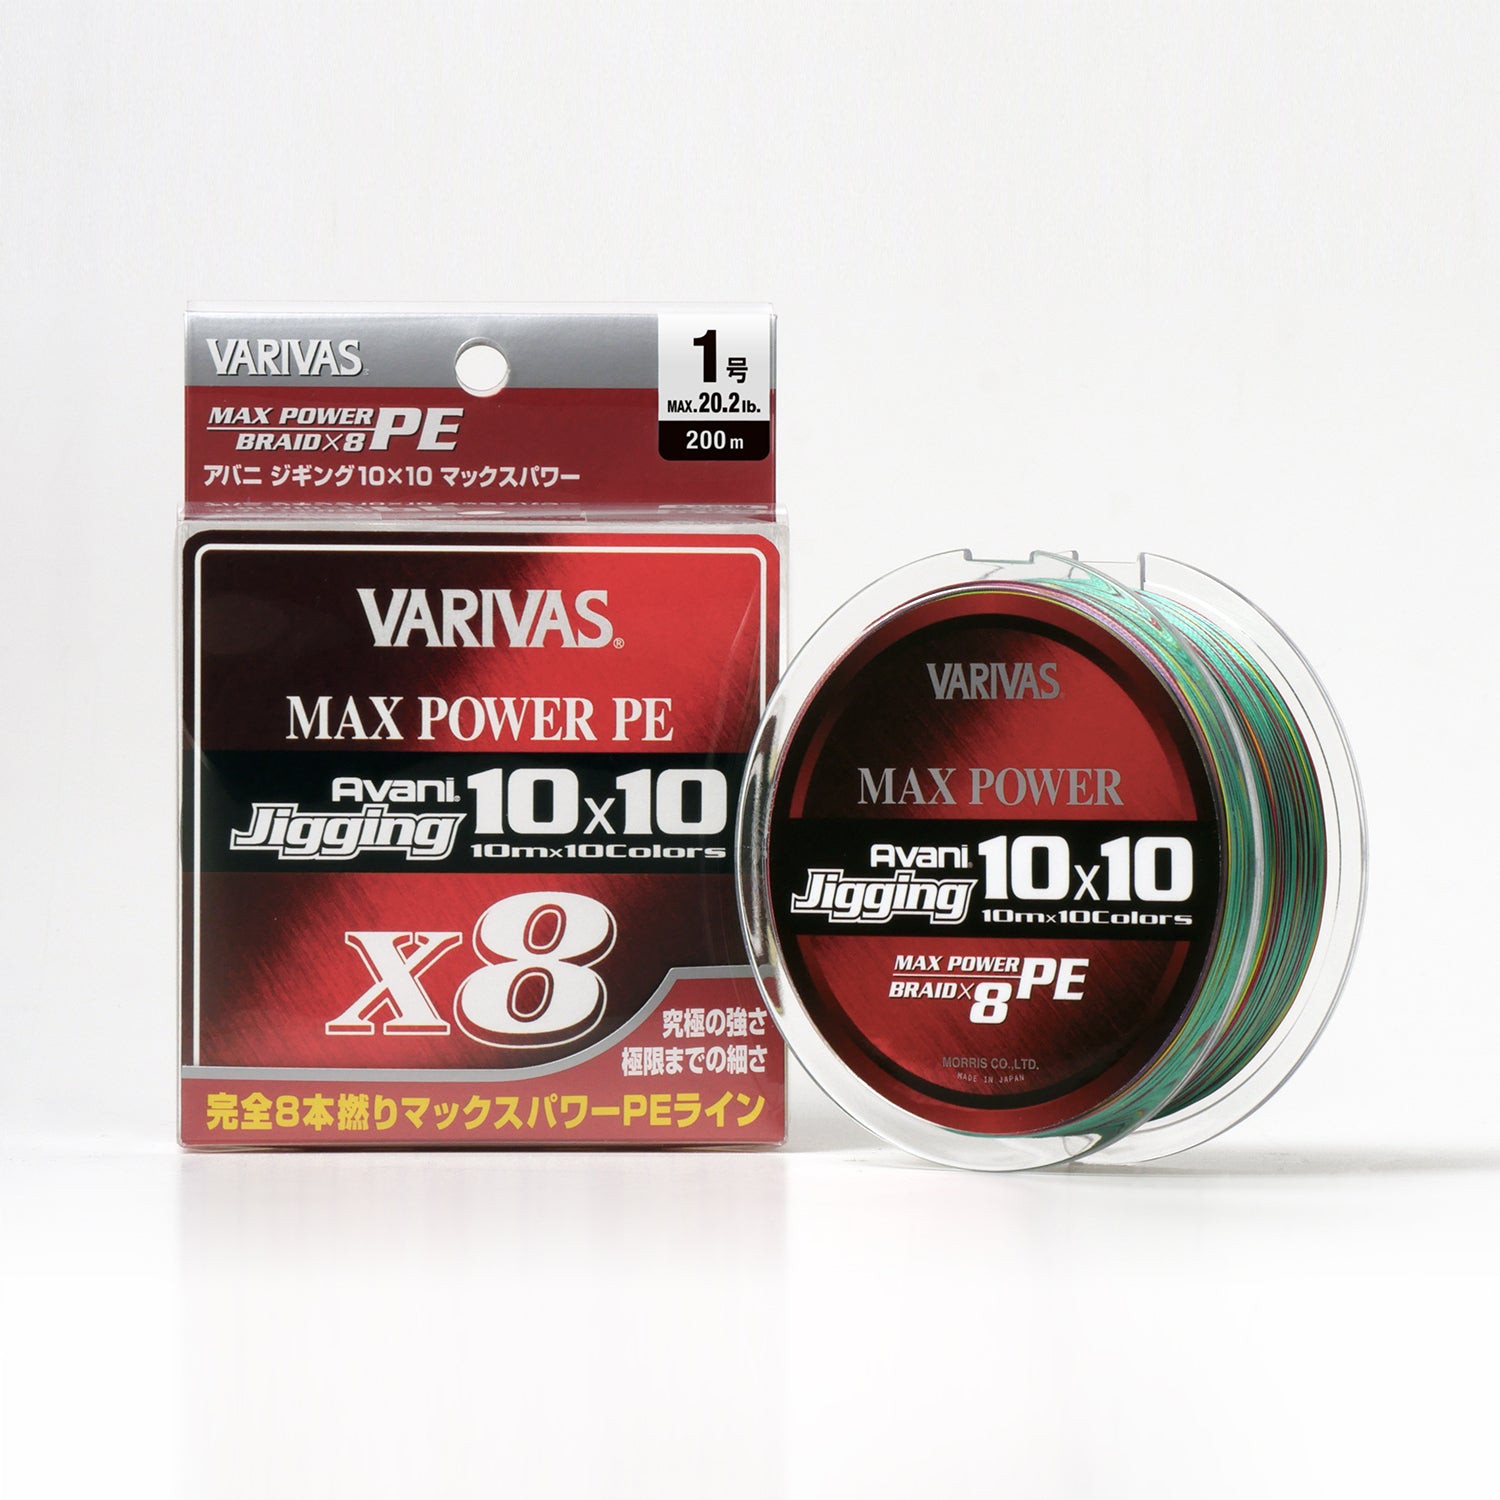 Varivas - Avani Jigging 10x10 Max Power PE X8